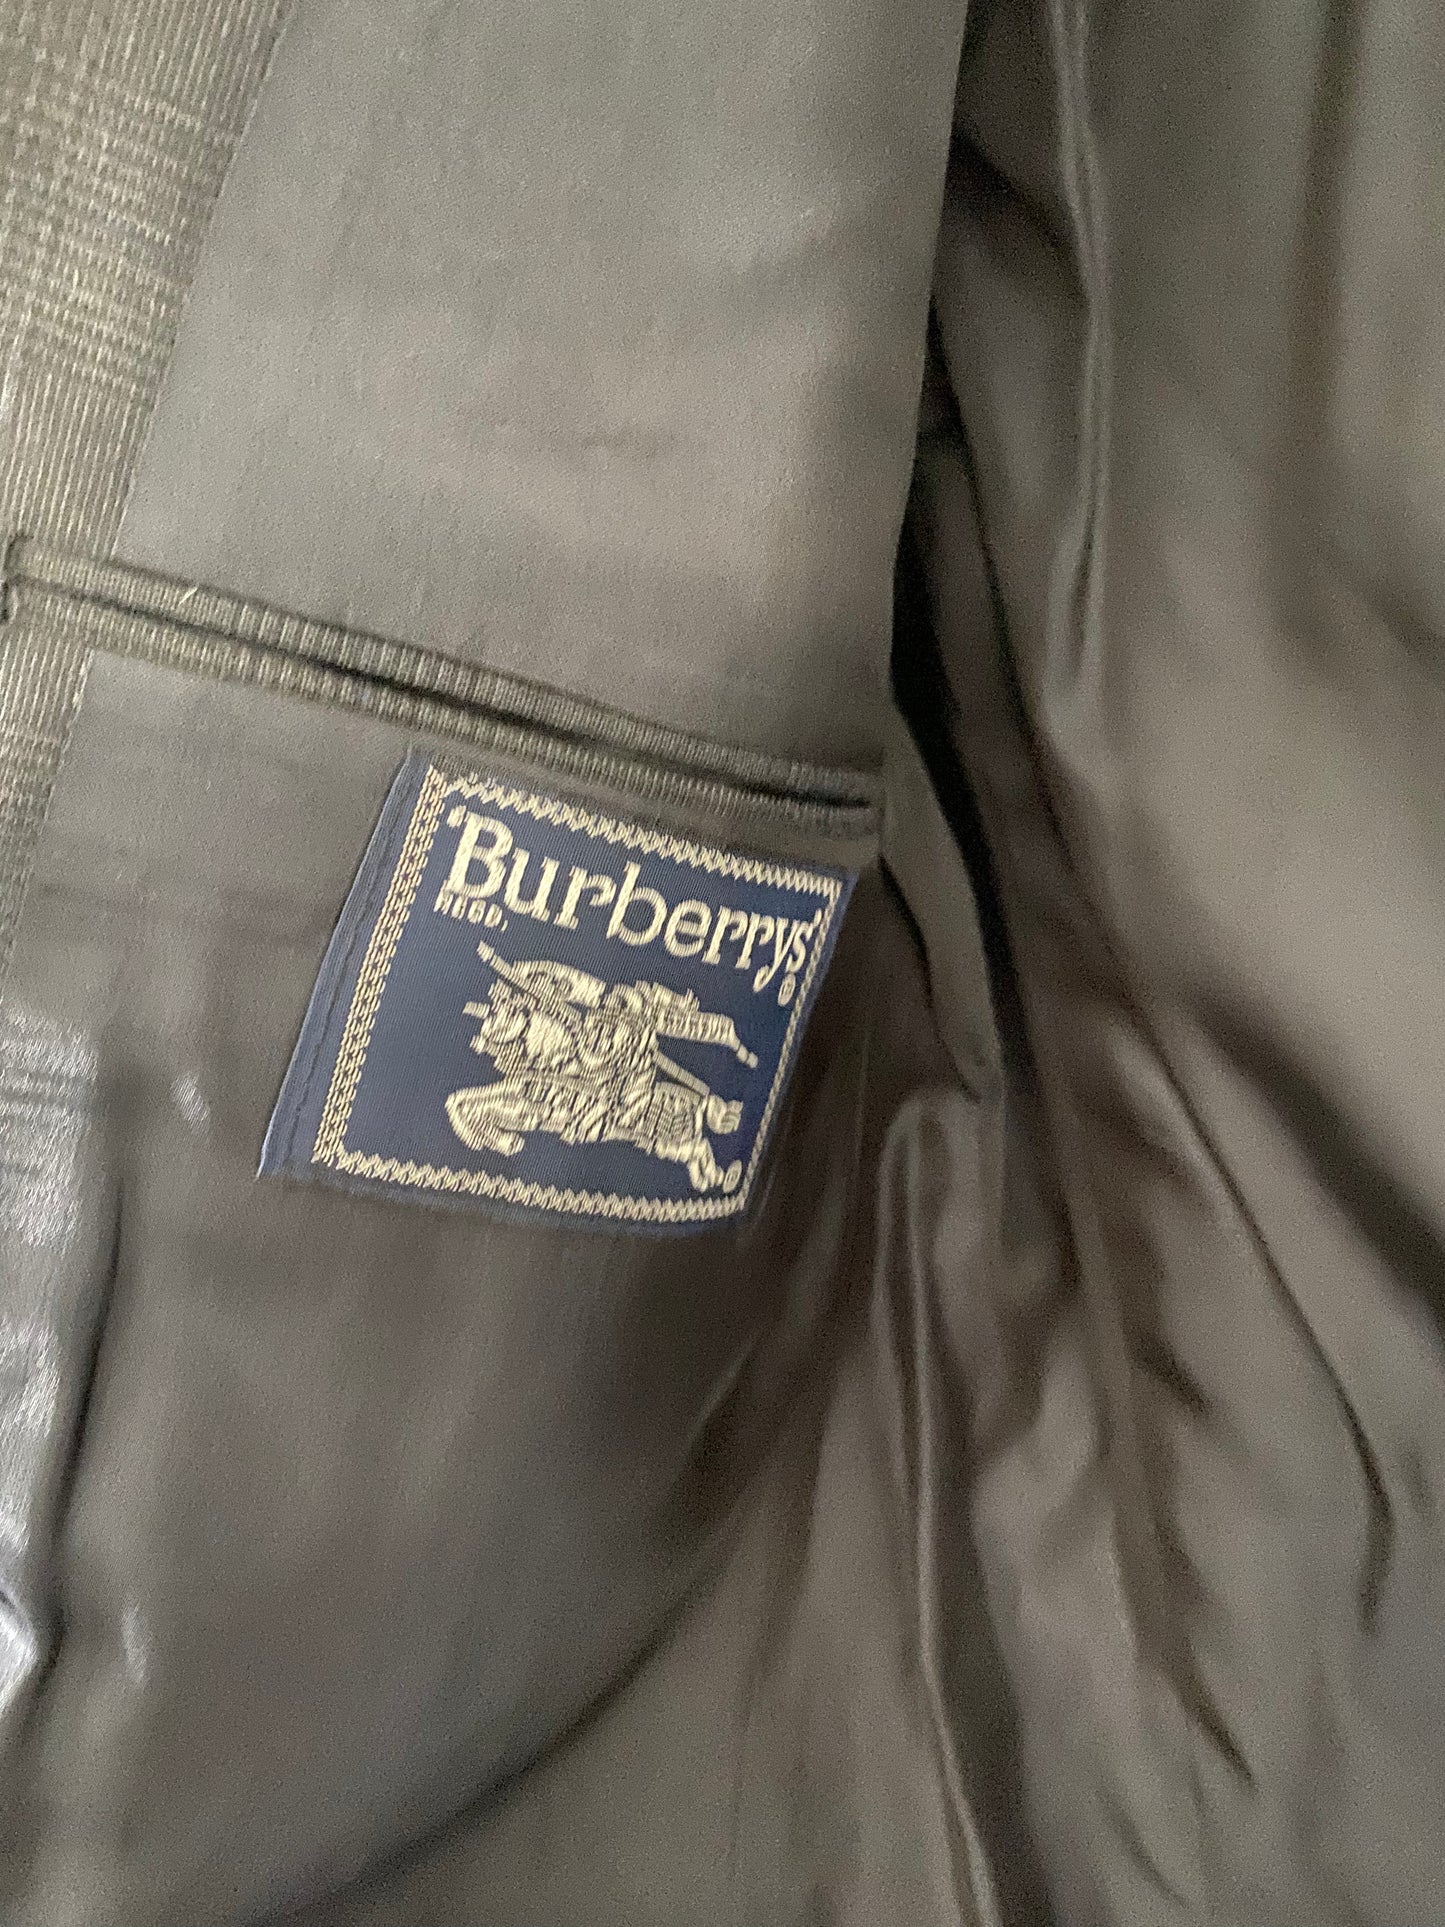 Burberry's Navy Suit